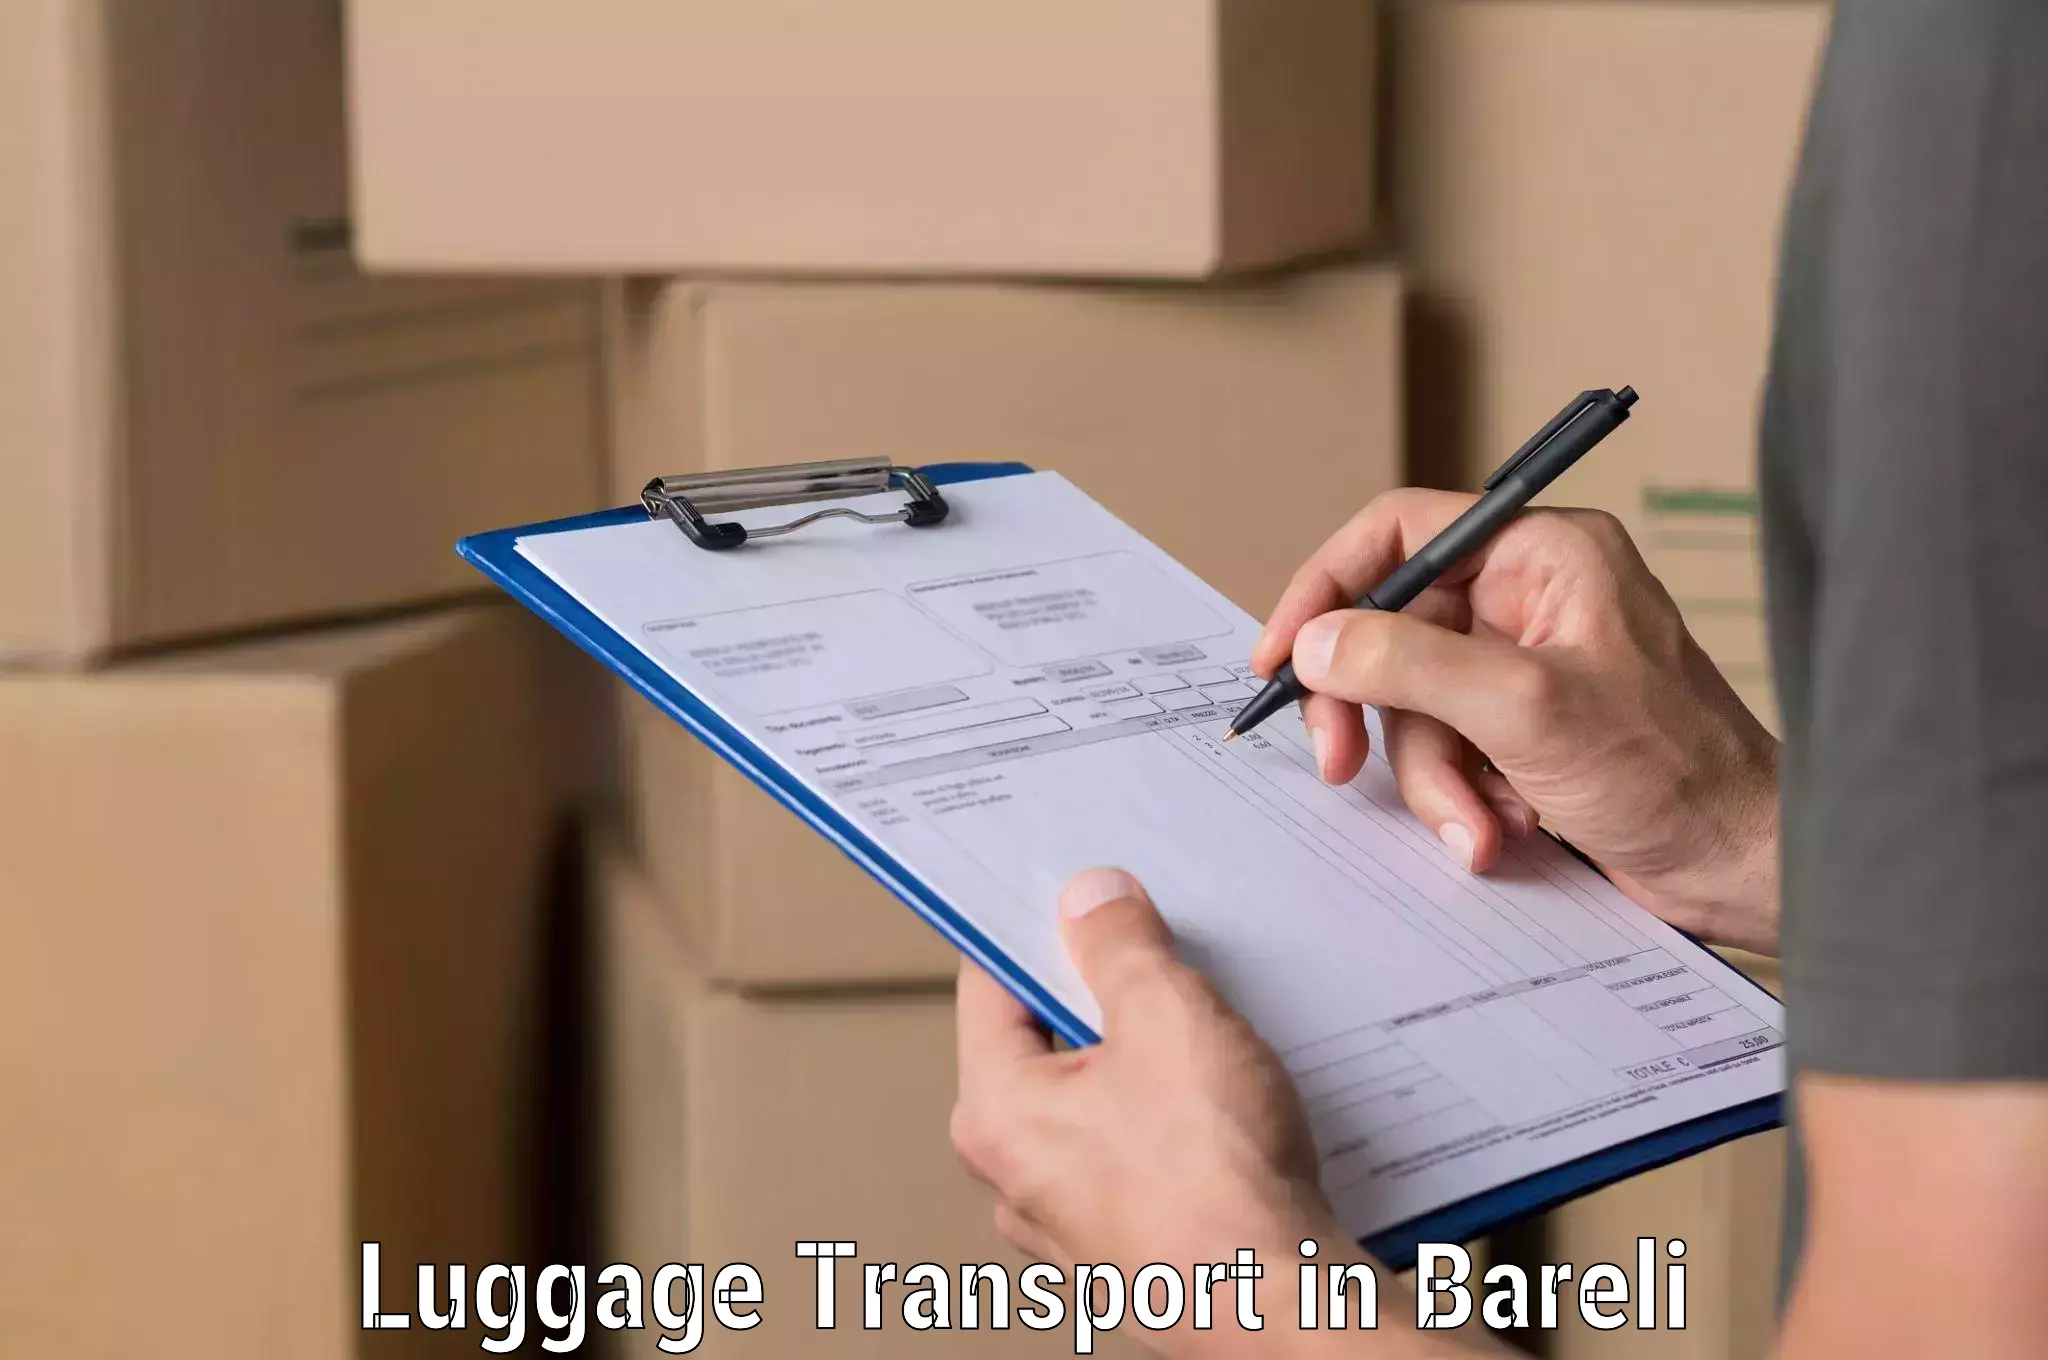 Baggage transport technology in Bareli